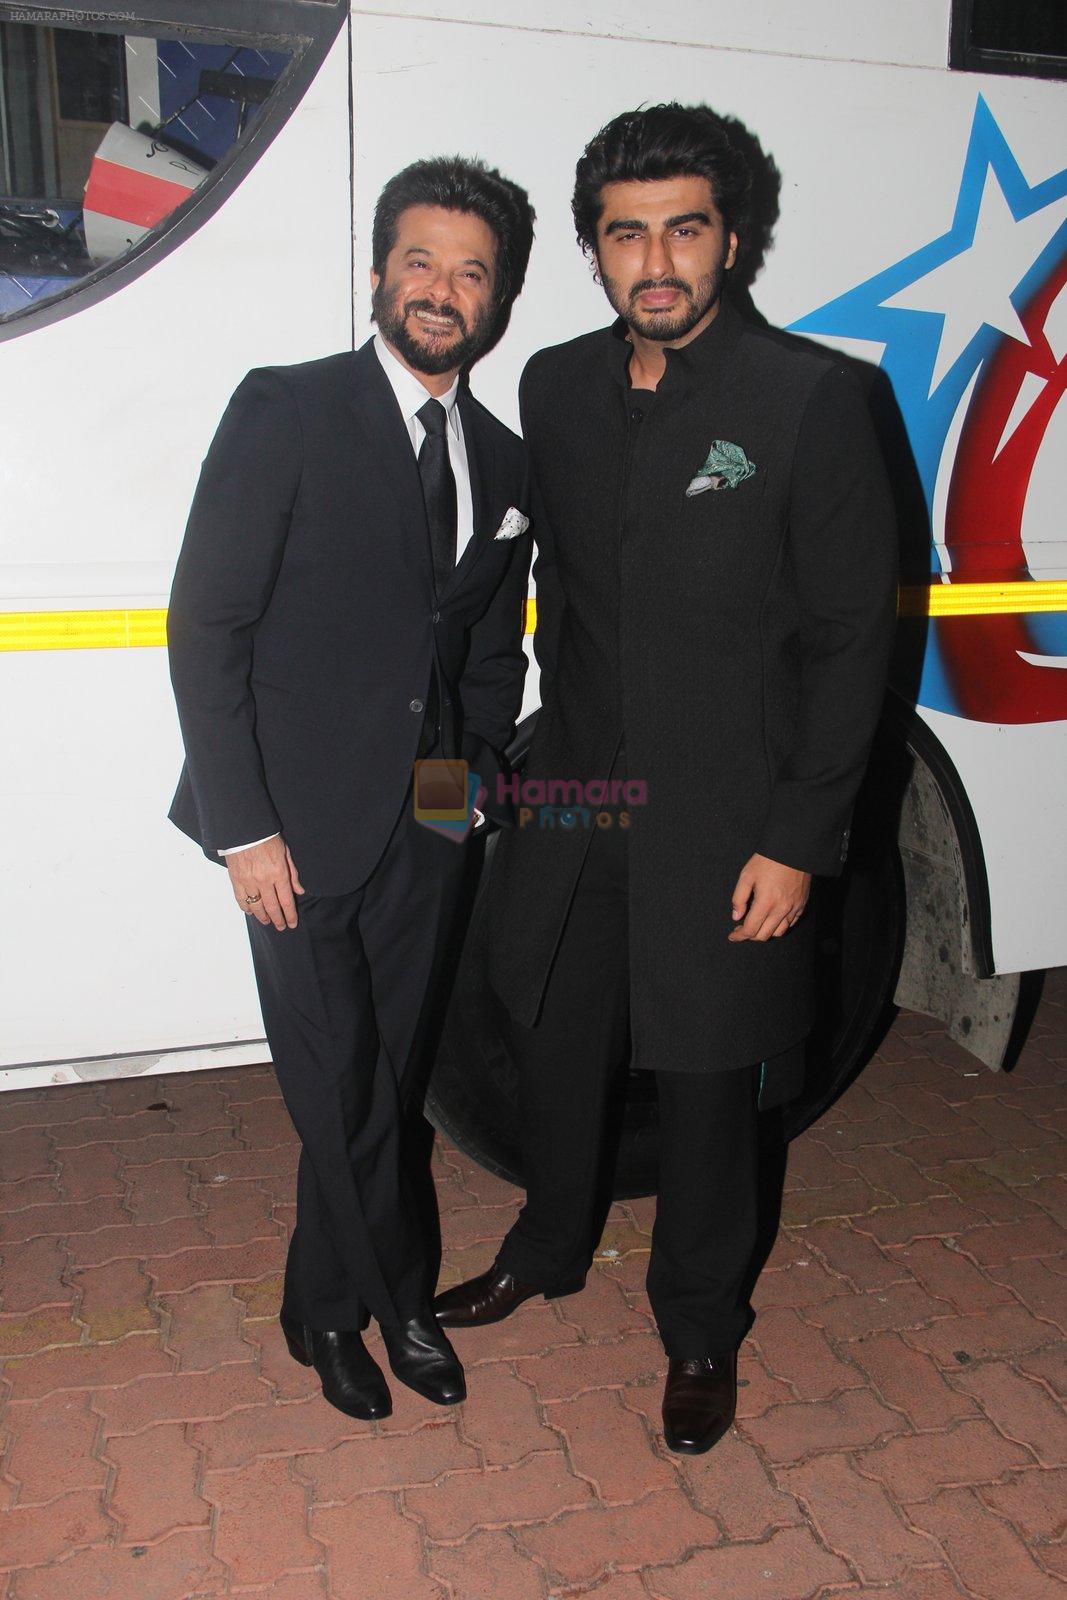 Anil Kapoor, Arjun Kapoor at GIMA Awards 2016 on 6th April 2016